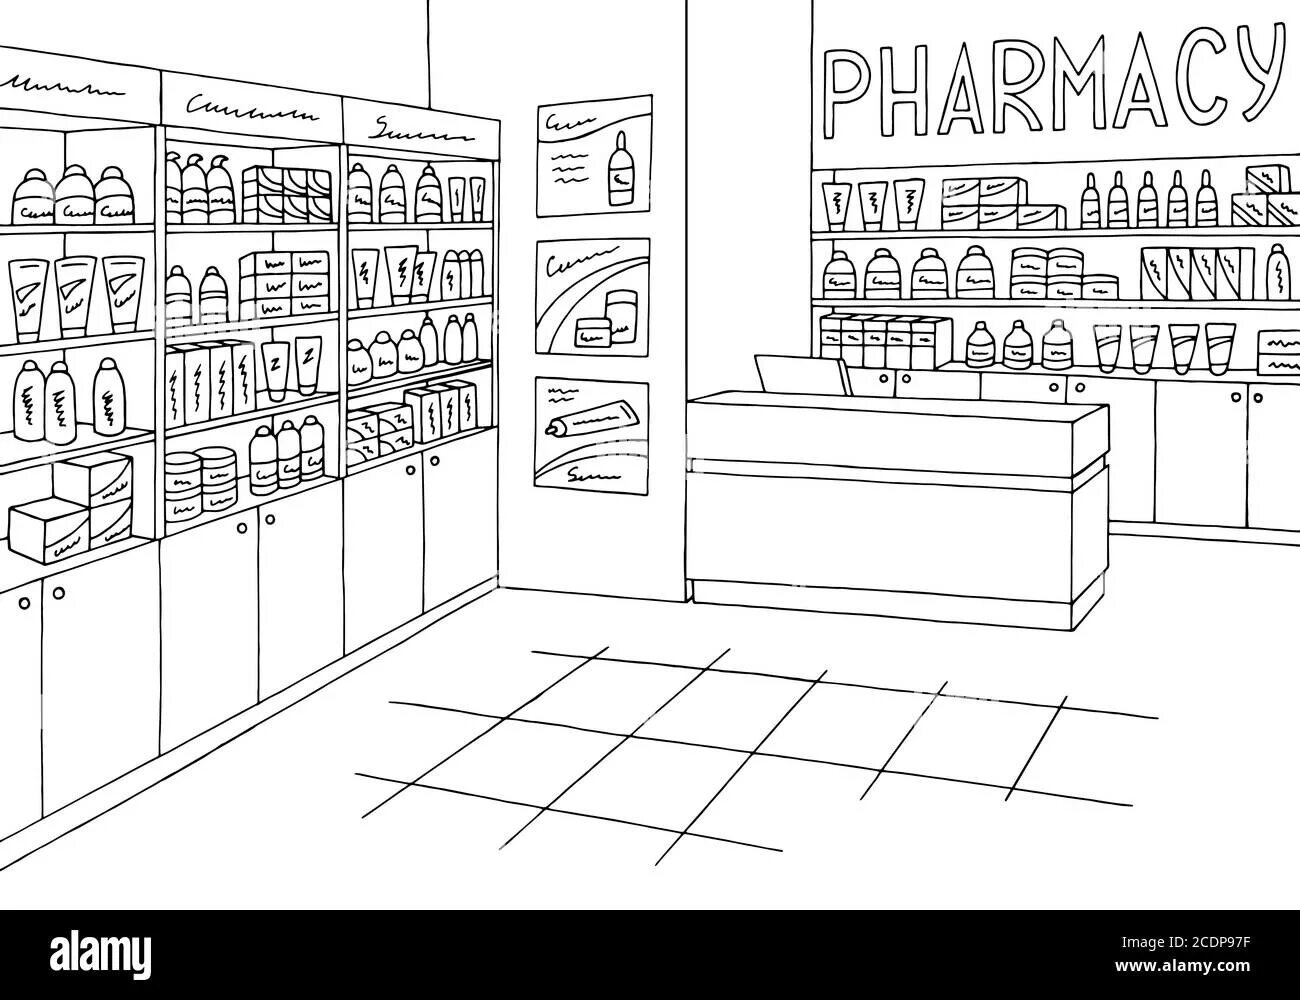 Pharmacist #2